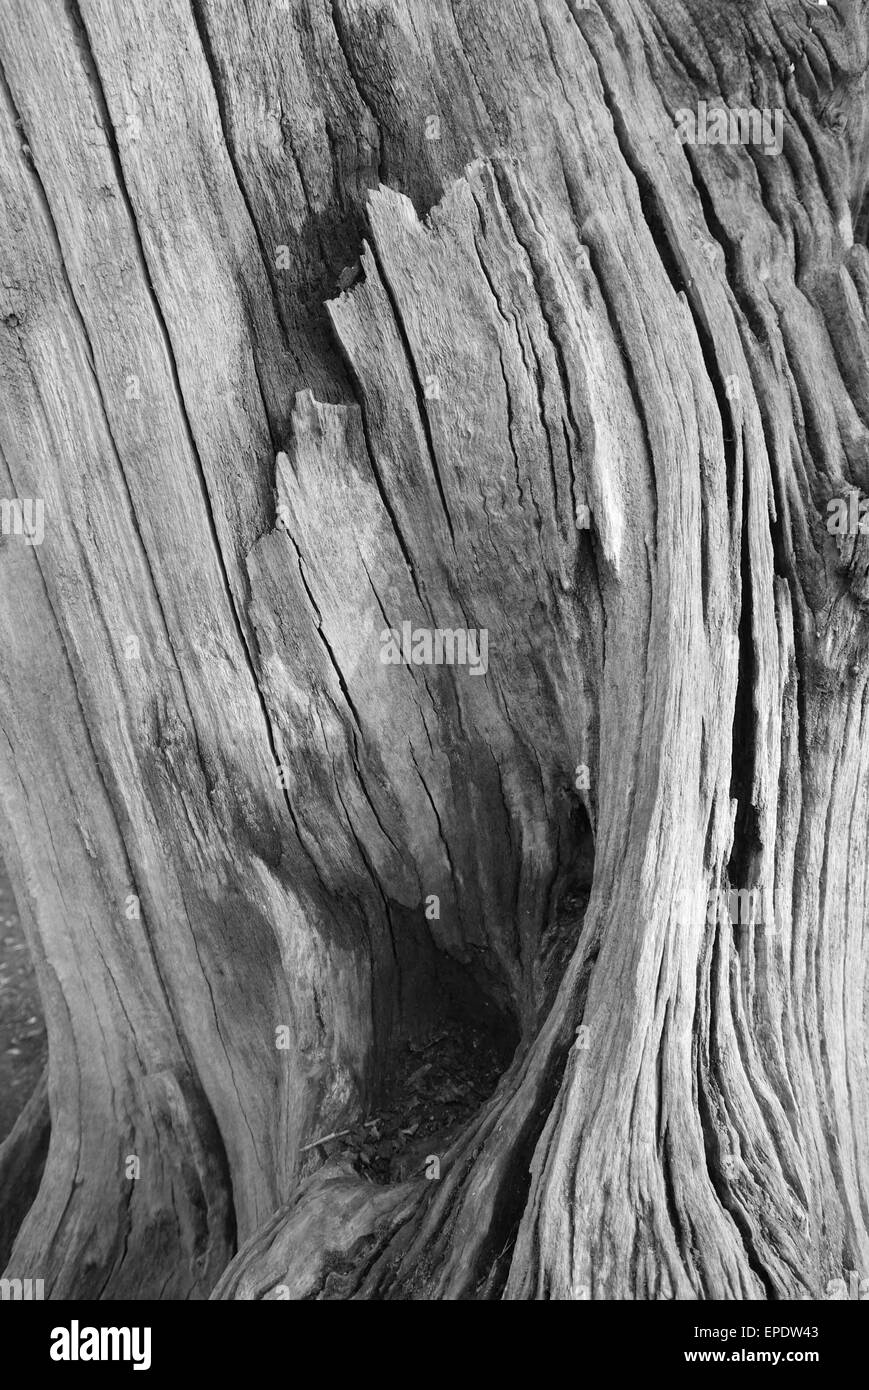 Tree stump bark with wood grain Stock Photo